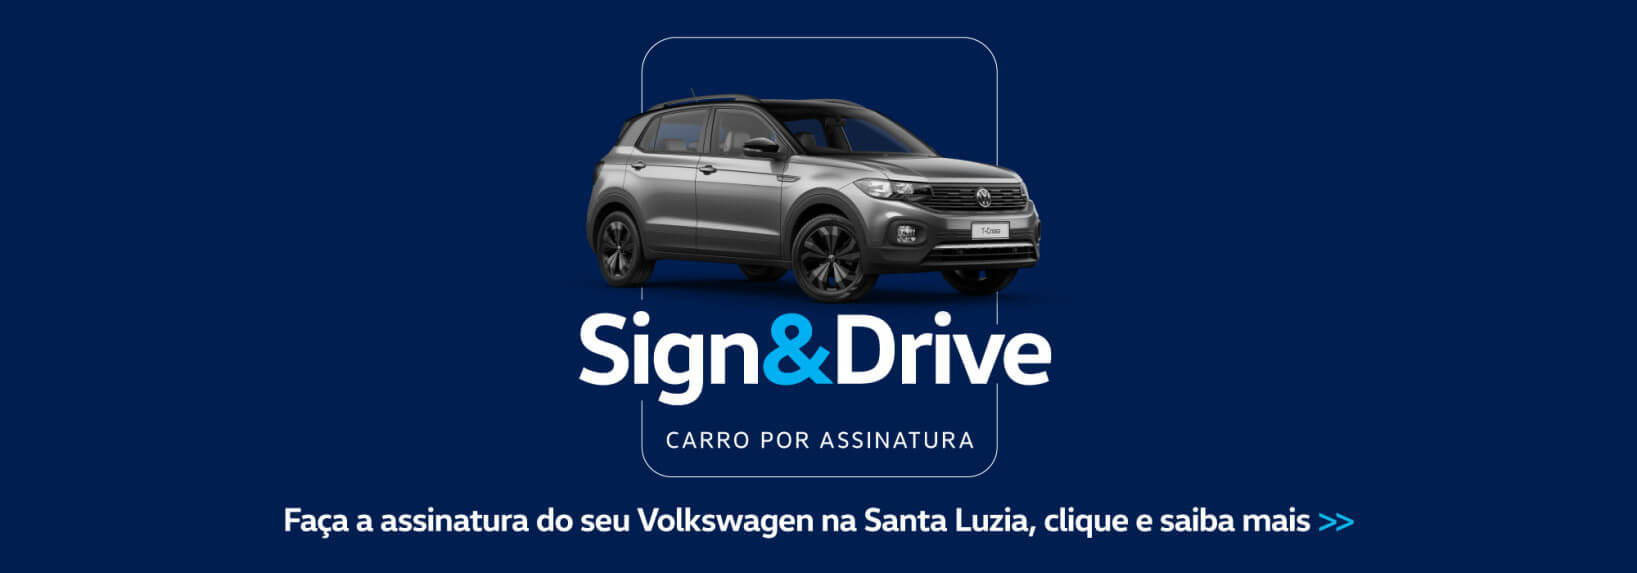 Sign&Drive - Carro por Assinatura